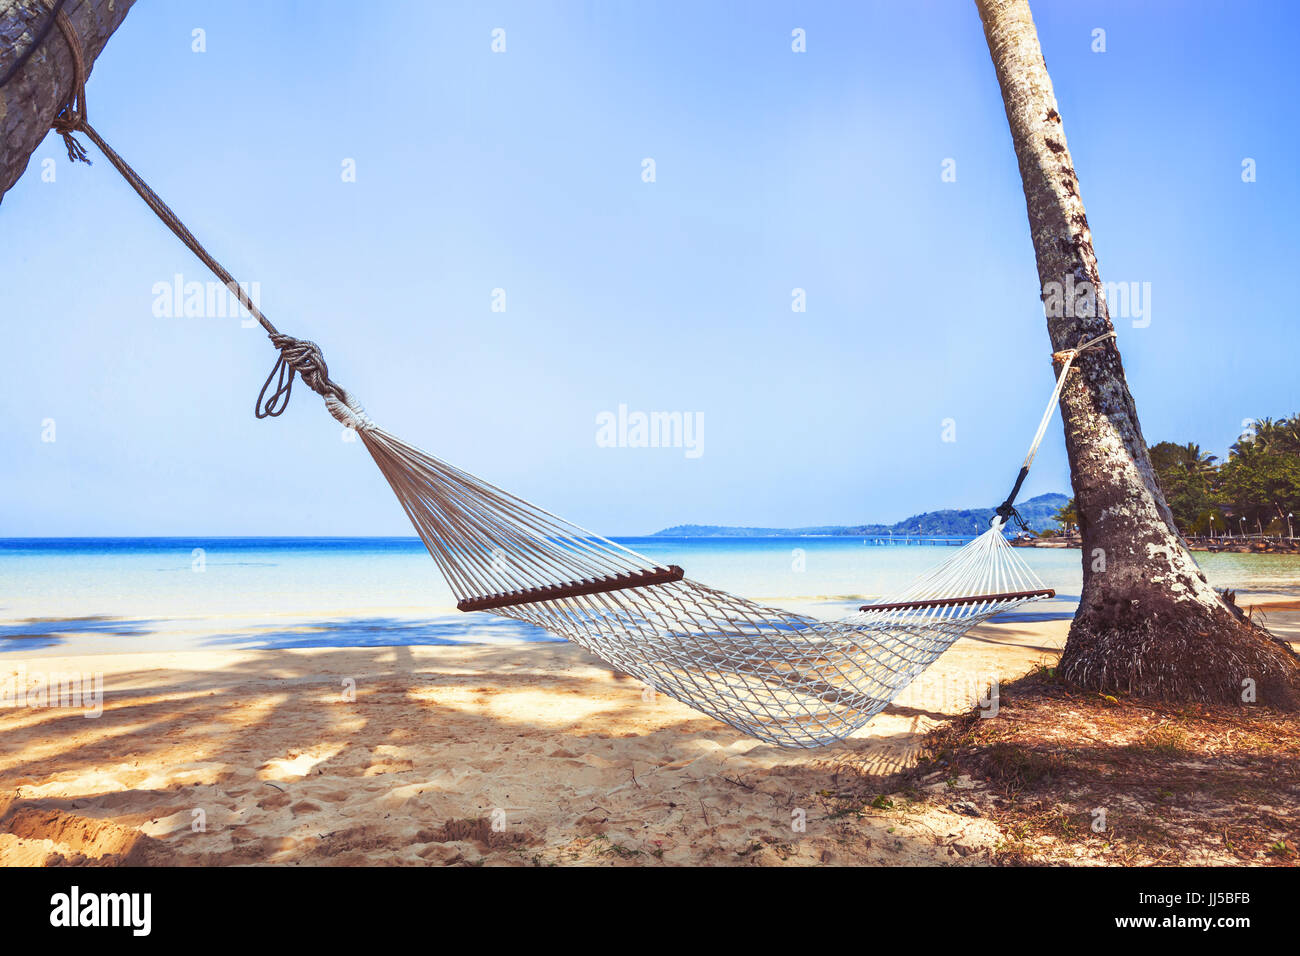 hammock on paradise beach, holidays on tropical island Stock Photo